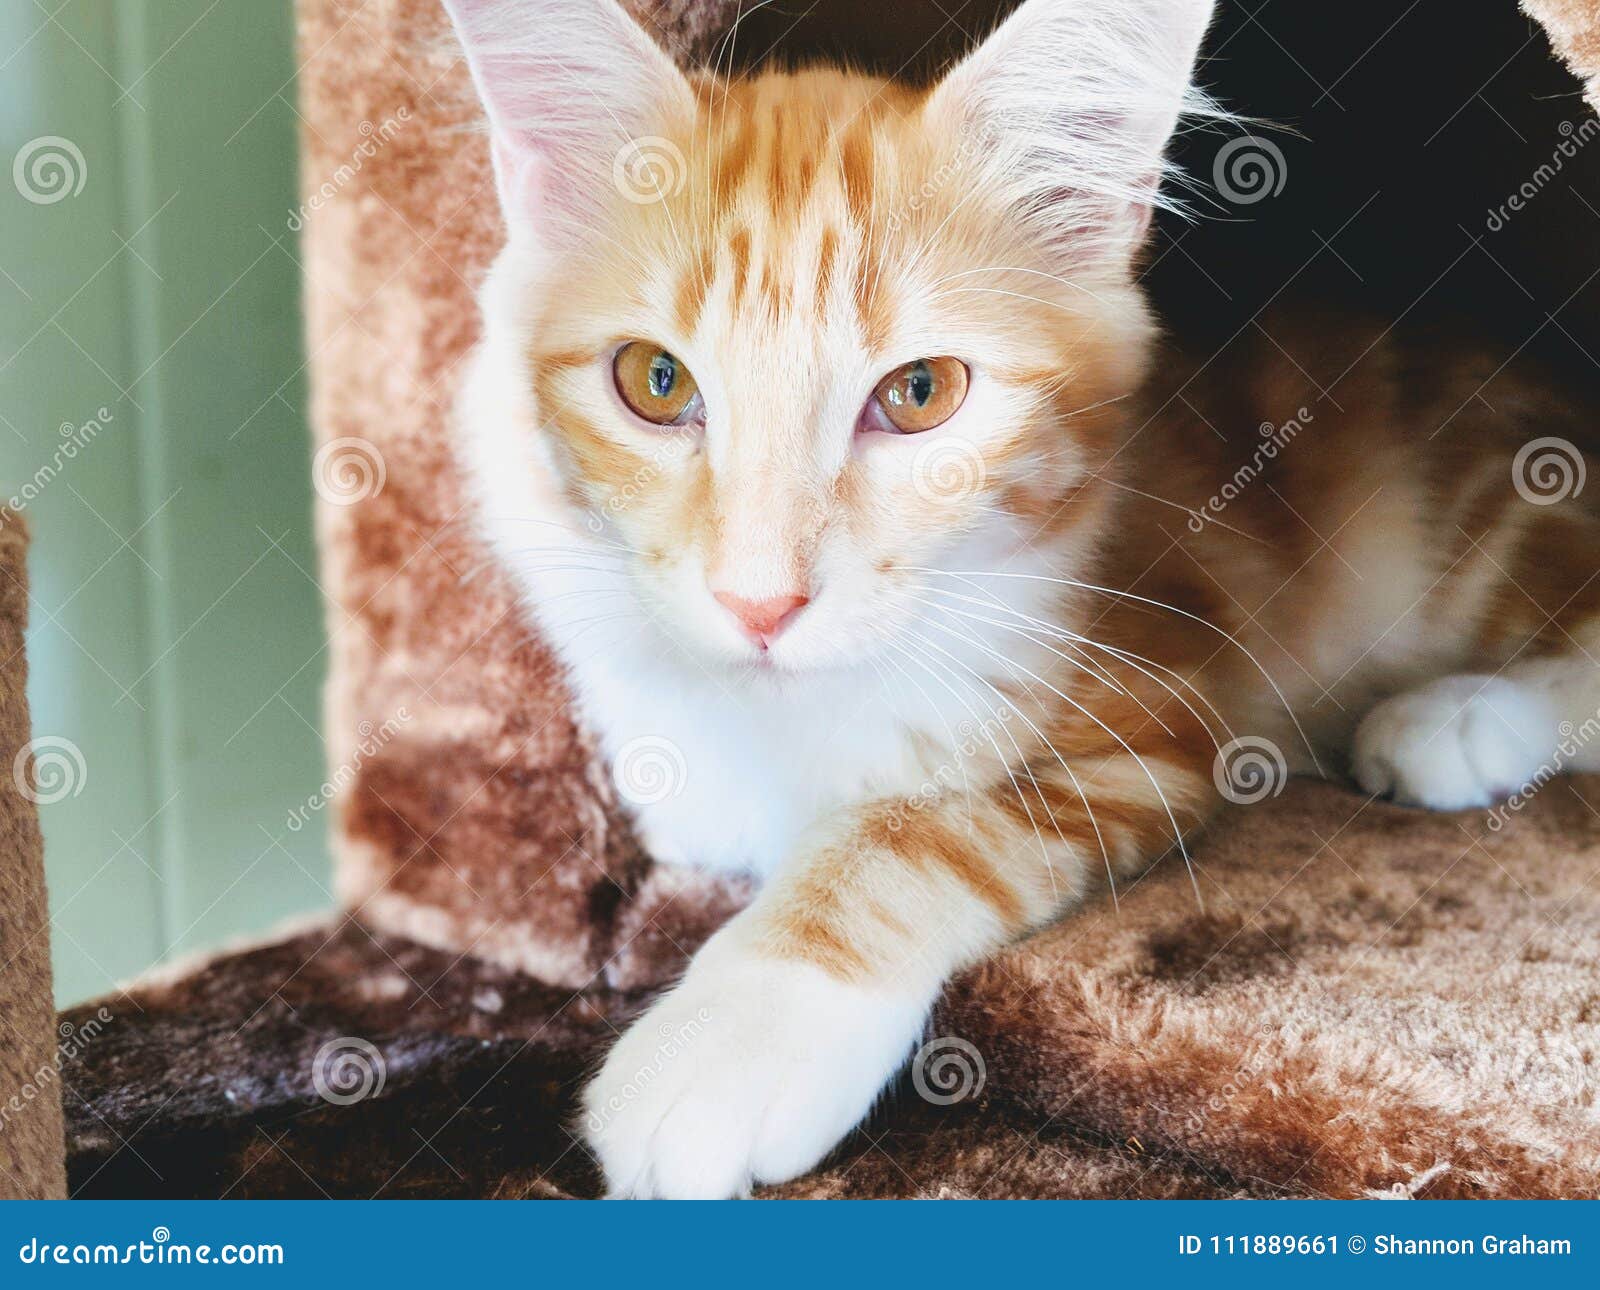 Orange Tabby Cat Laying Down Stock Image - Image of tabby, kitten ...